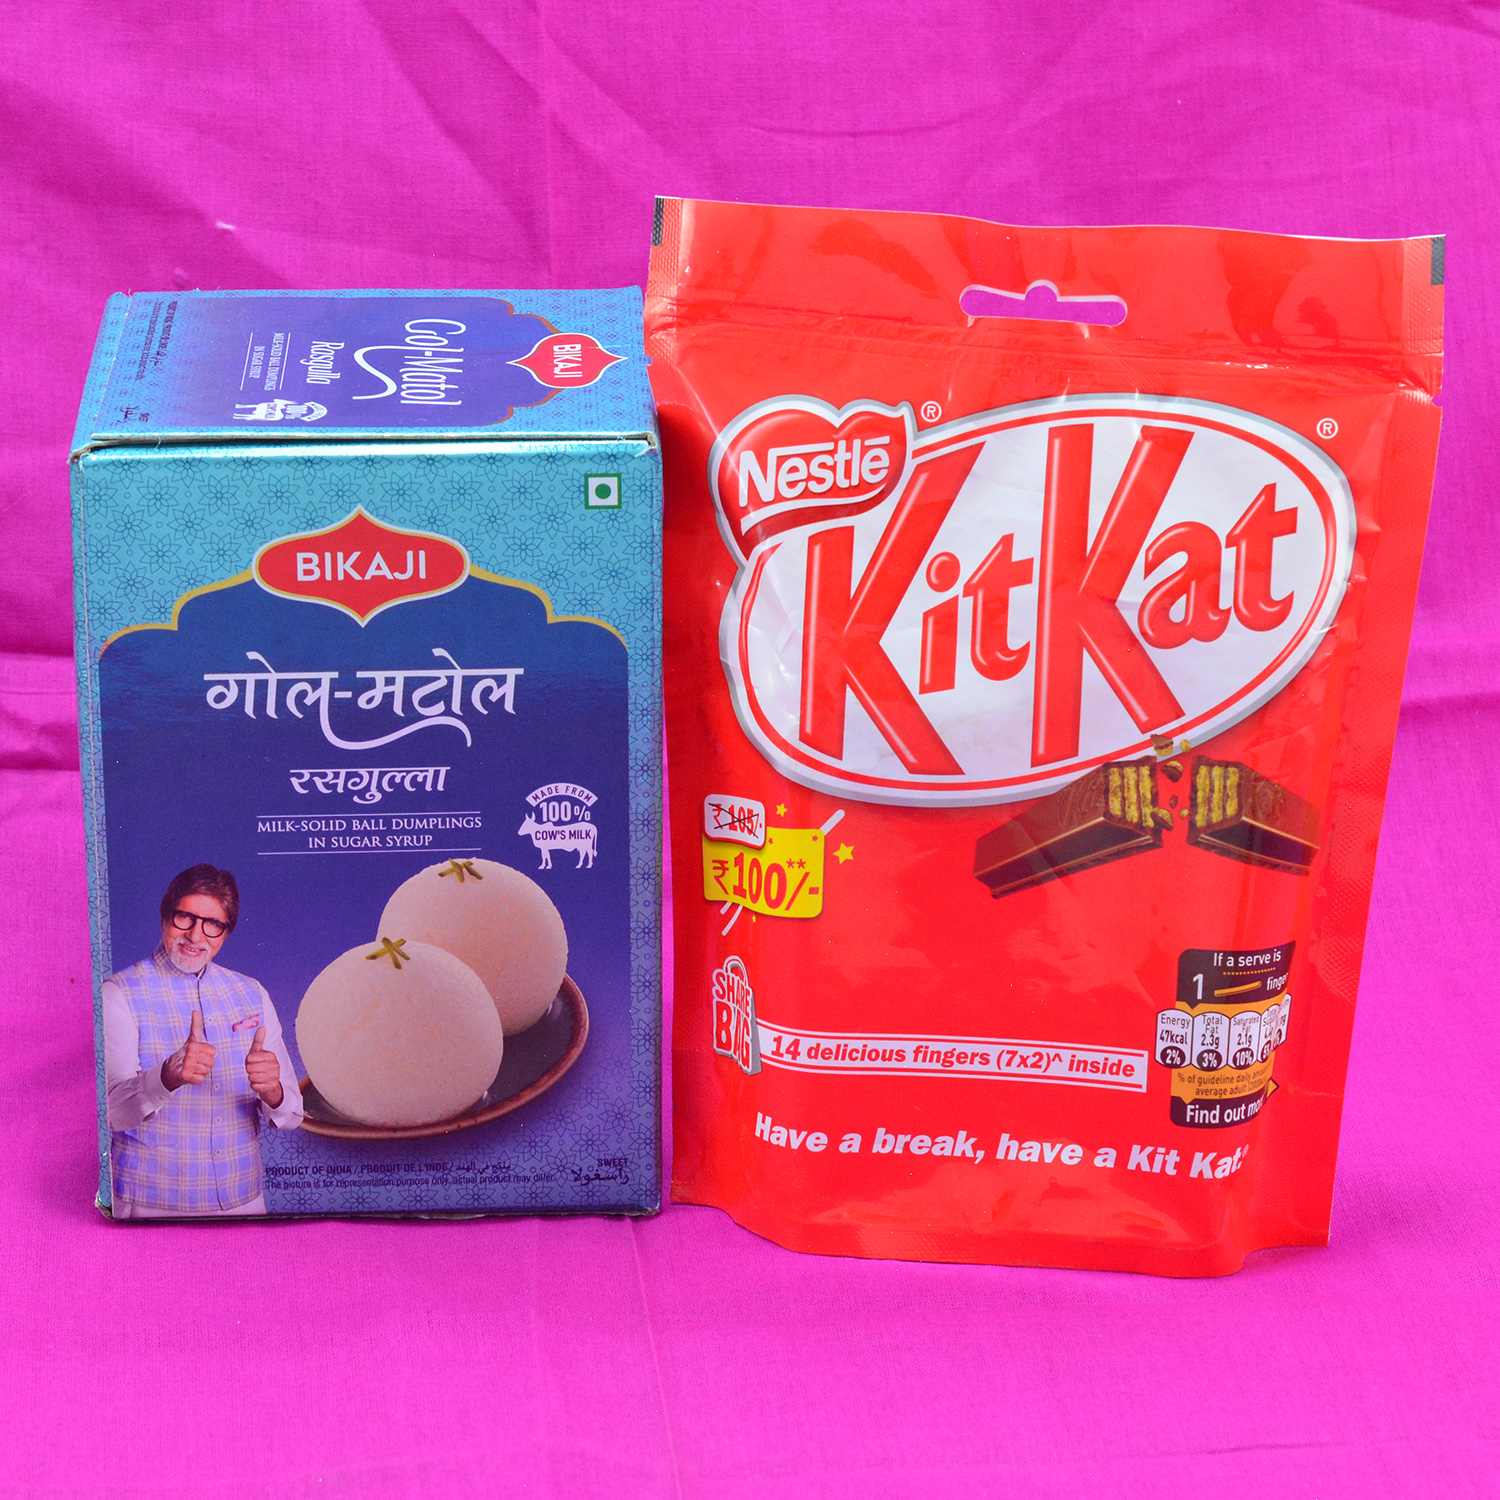 Luscious Bikaji Gol Matol Rasgulla with Yummy Nestle Kitkat